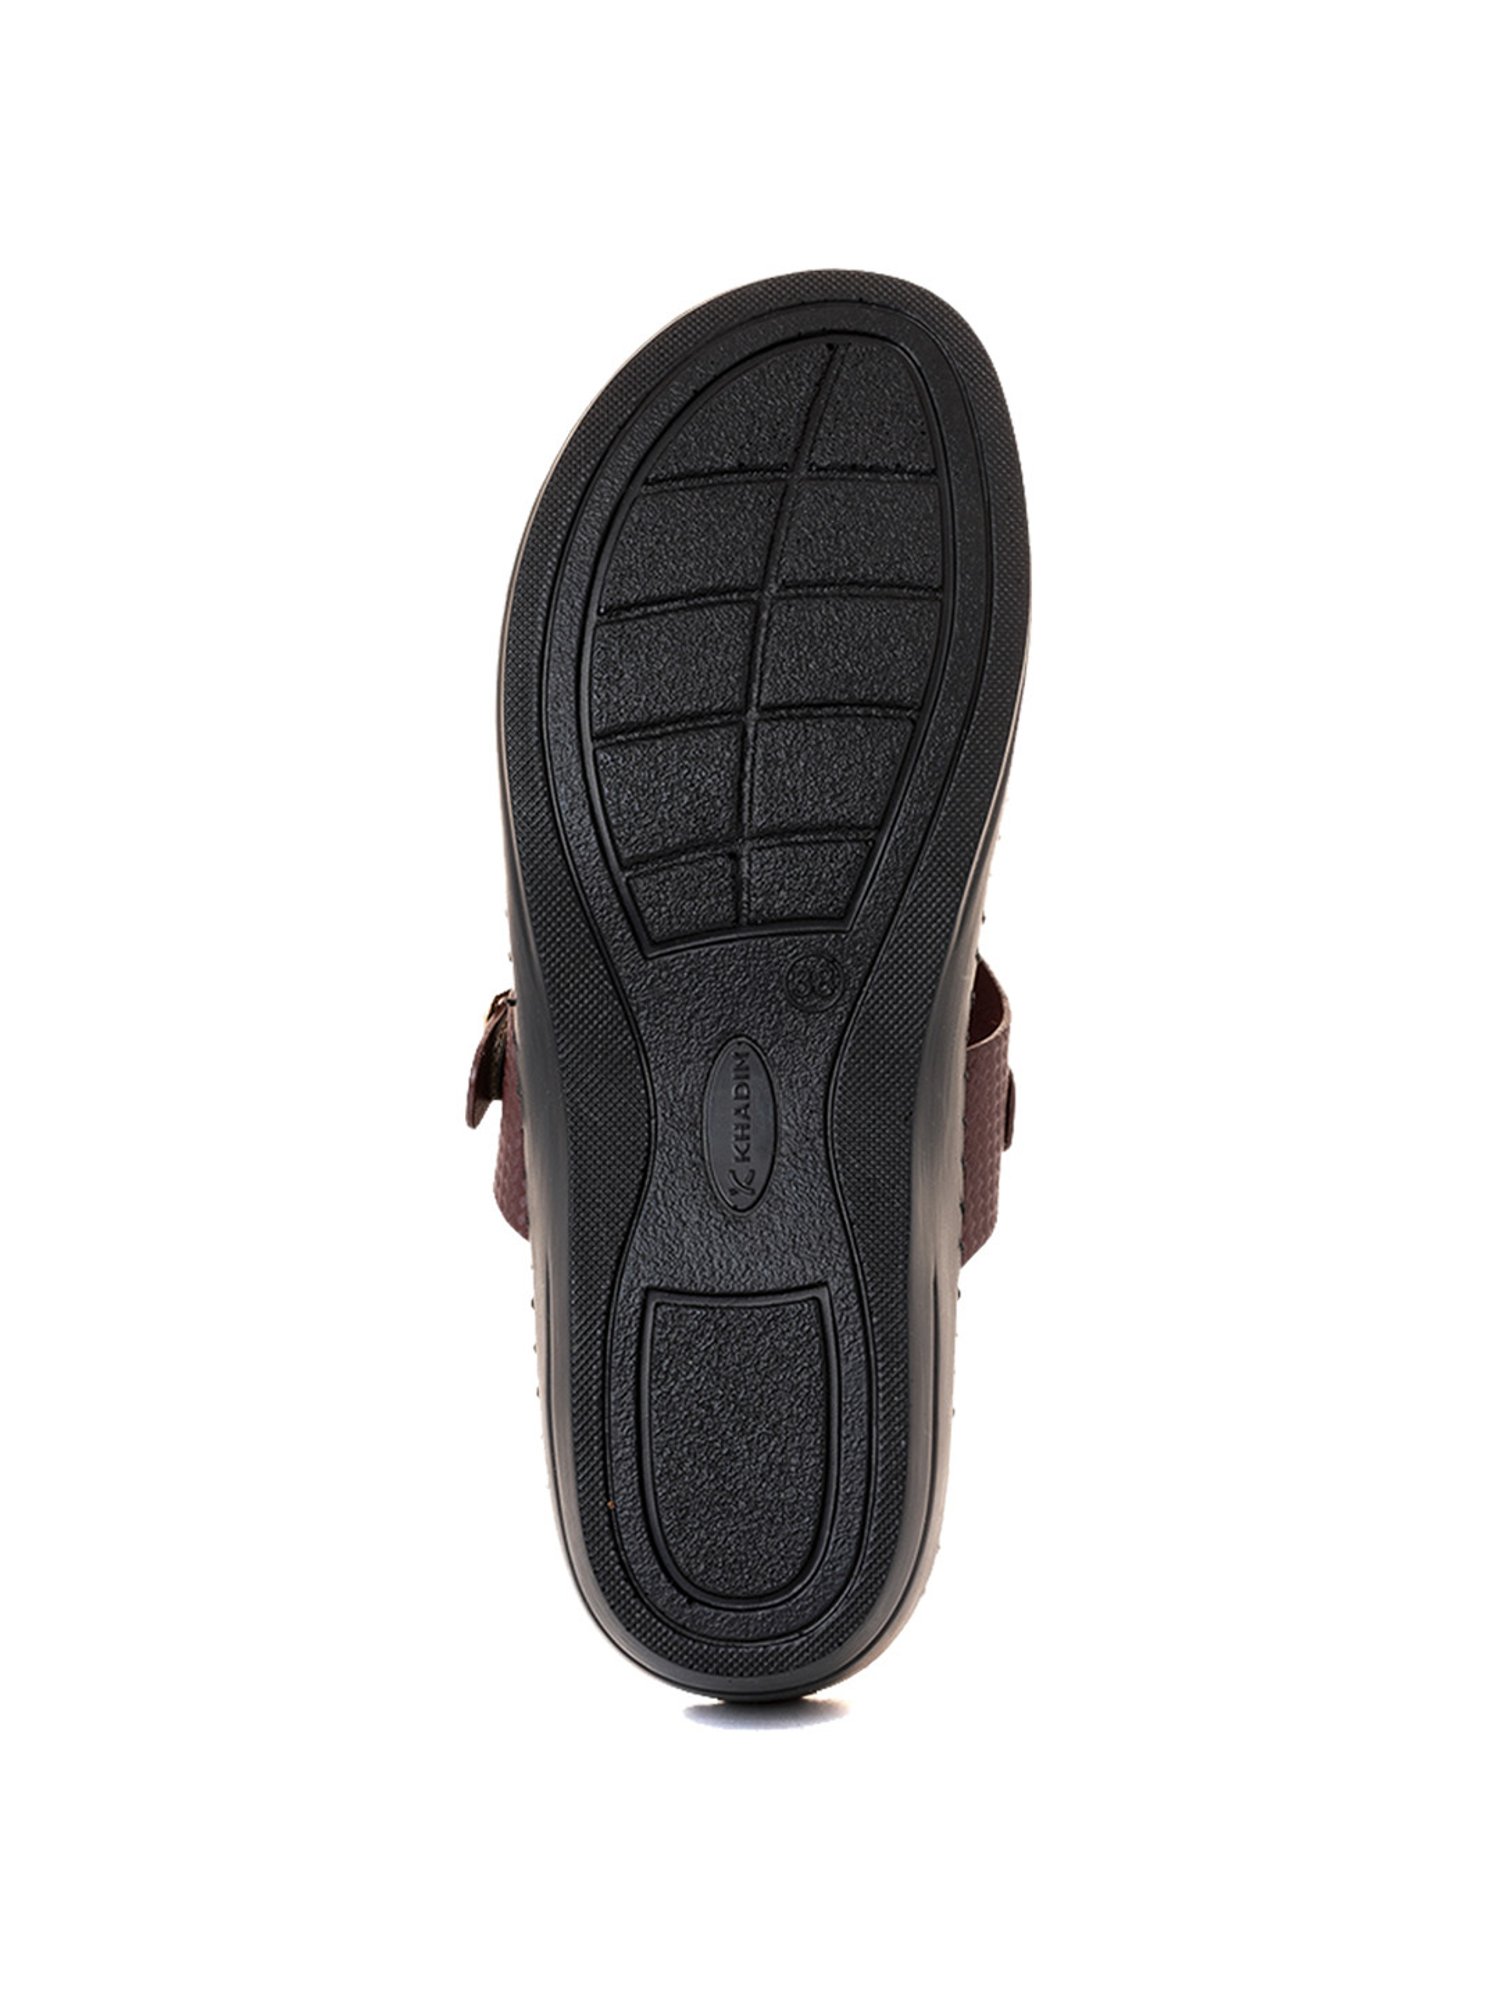 KHADIM - Brown Men's Sandals - Buy KHADIM - Brown Men's Sandals Online at  Best Prices in India on Snapdeal